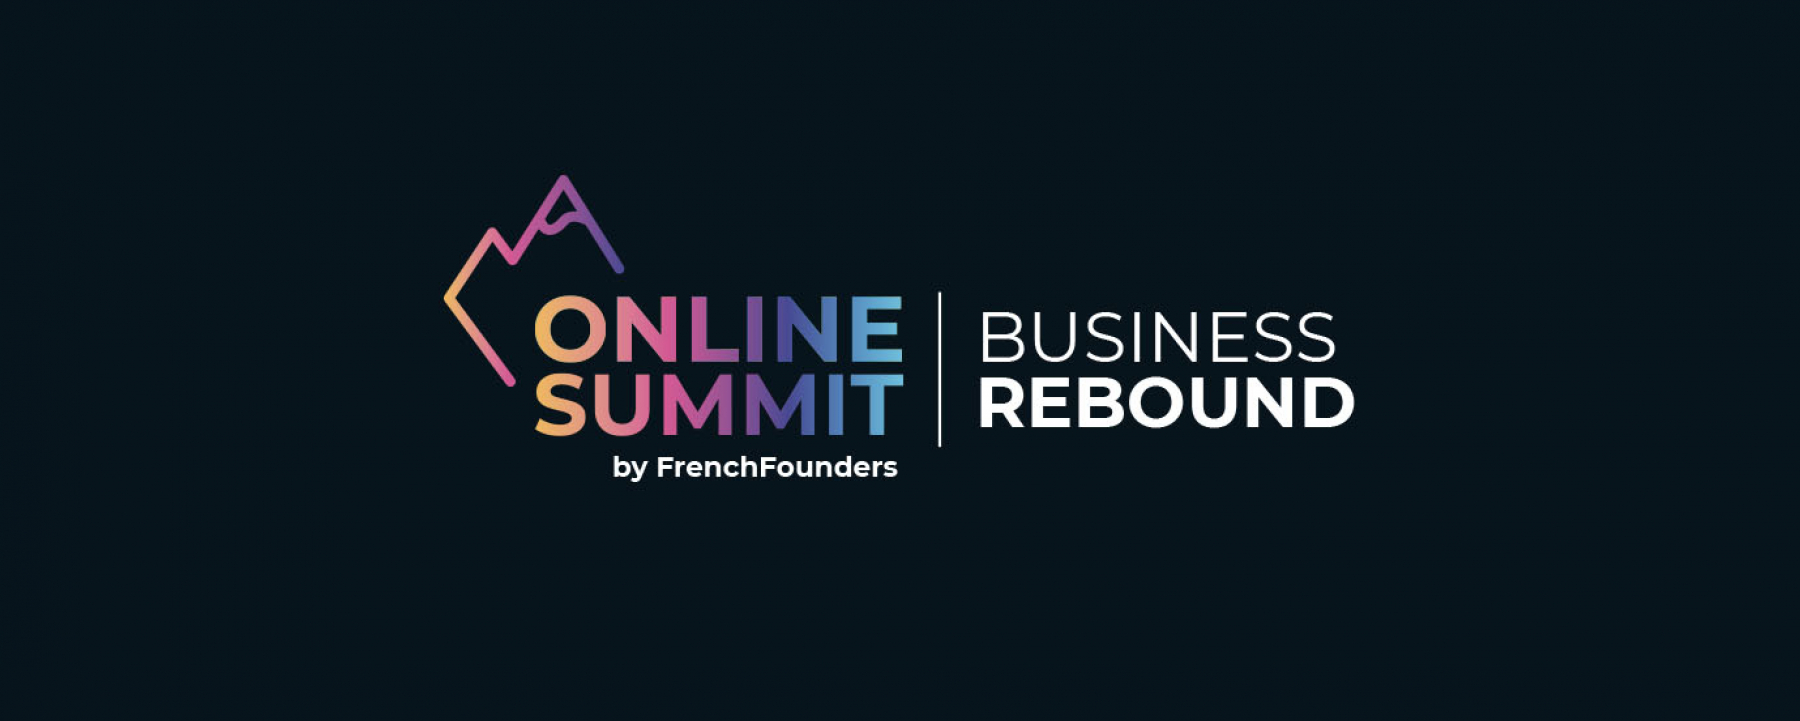 Webinar Online Summit : Business Rebound, le 29 avril 2020, organisé par FrenchFounders